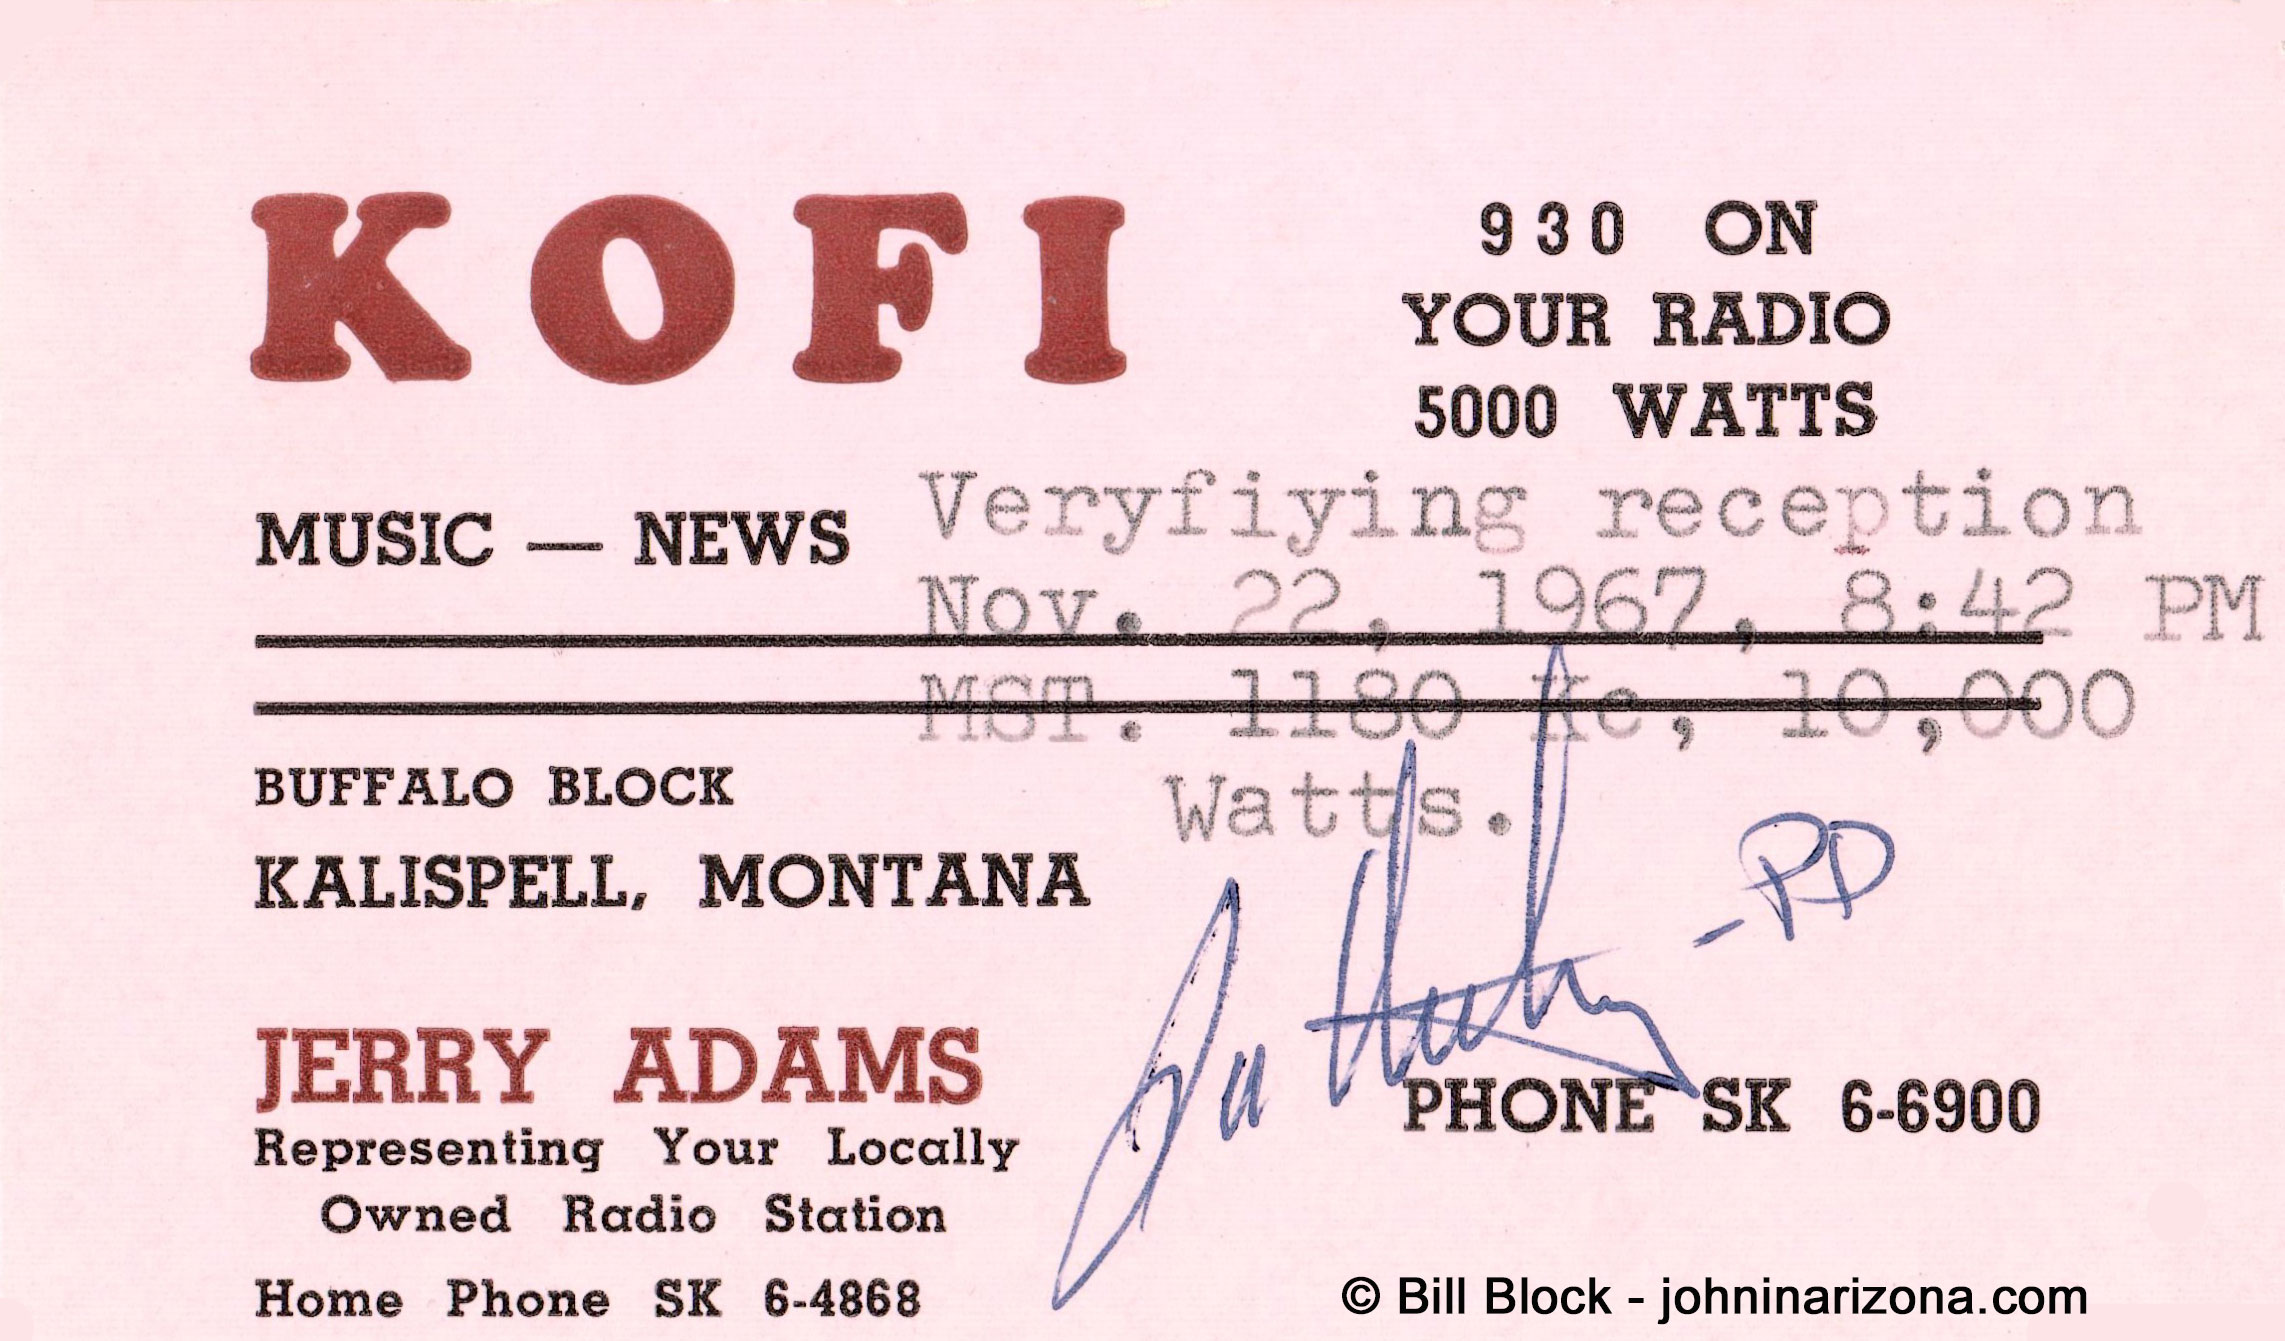 KOFI Radio 1180 Kalispell, Montana